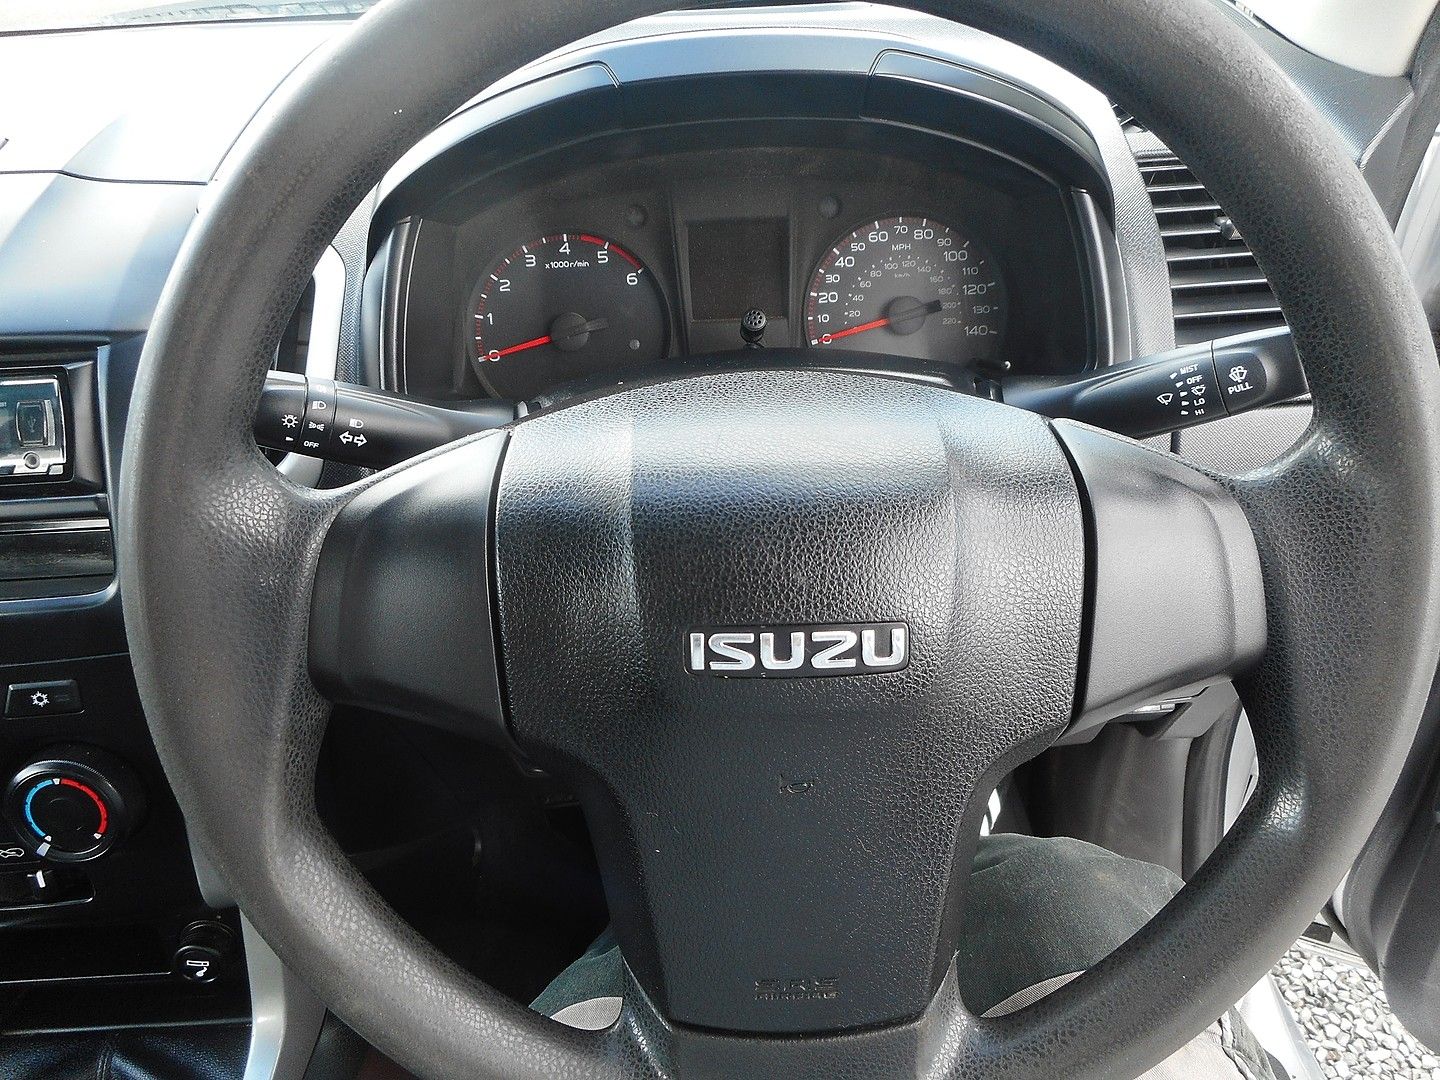 ISUZU D-Max 2.5 4X4 Eiger Double Cab (2014) - Picture 25